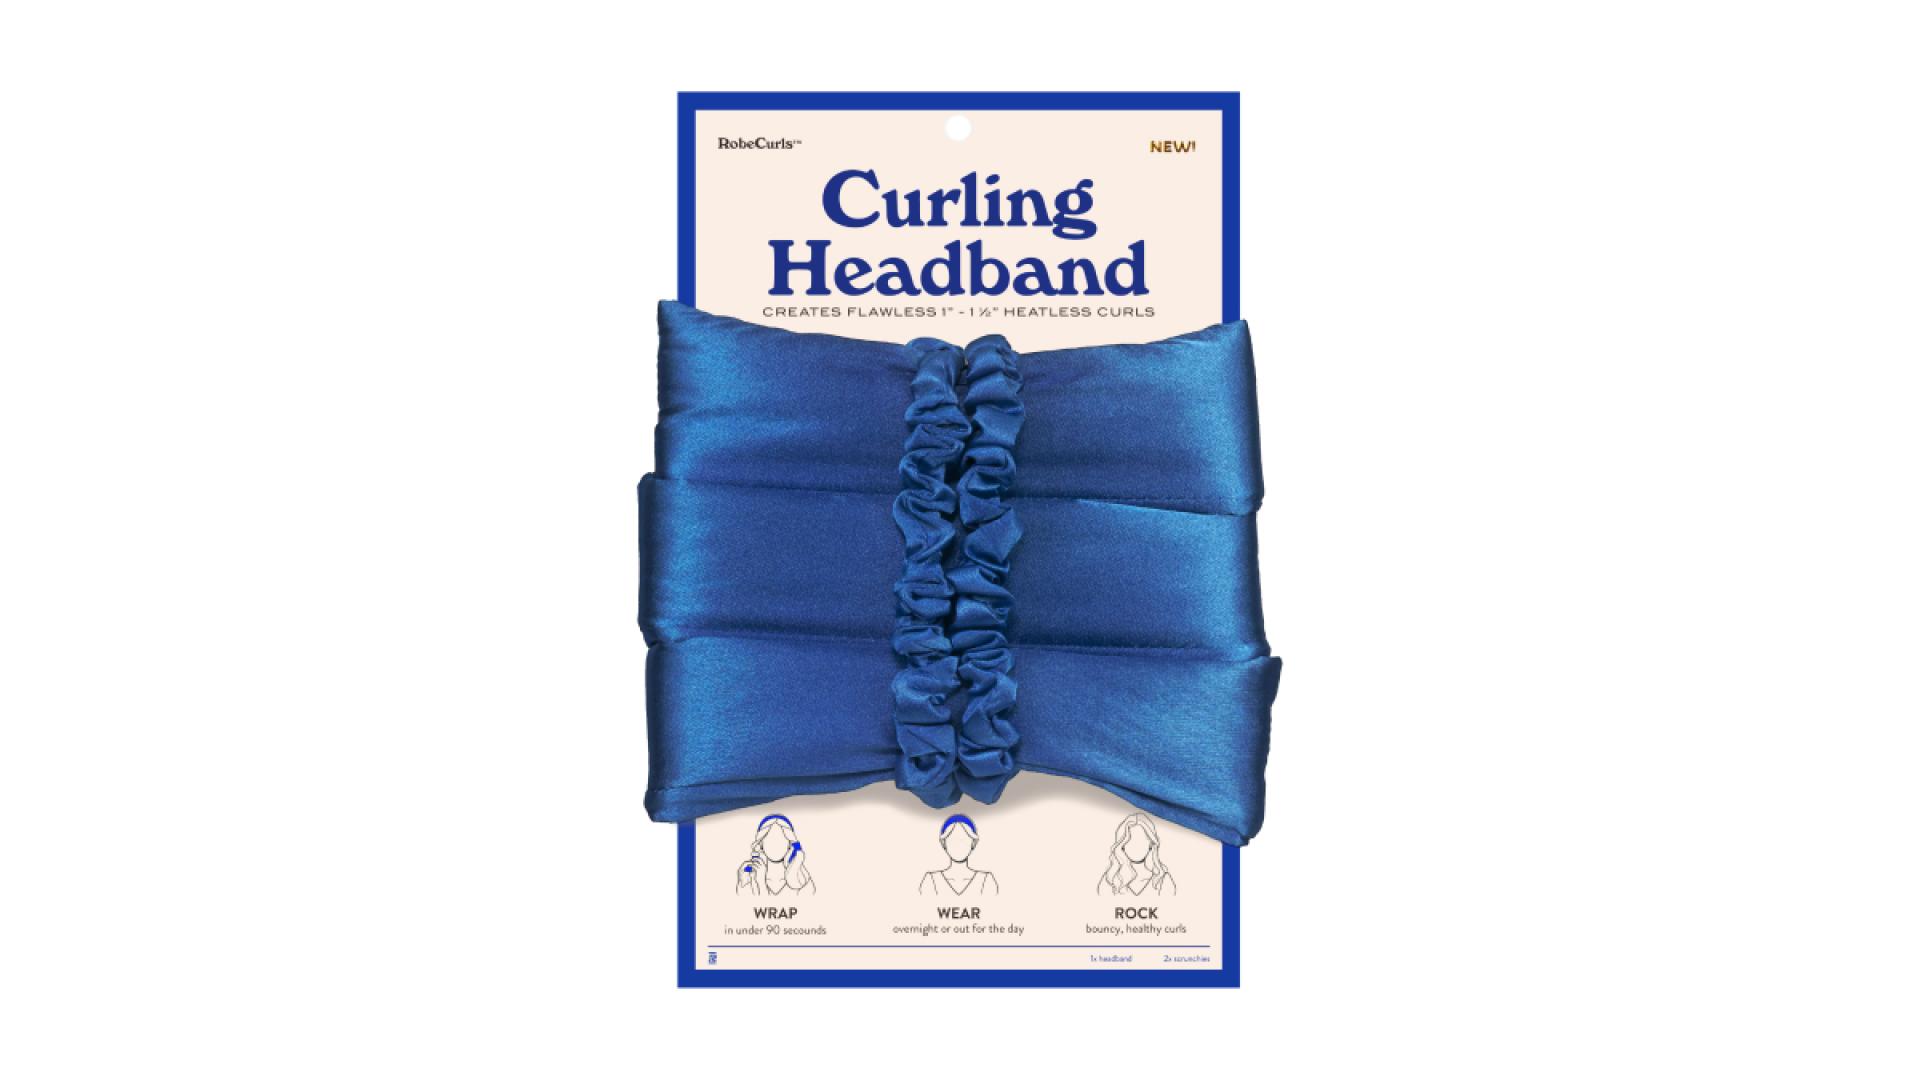 The Curling Headband